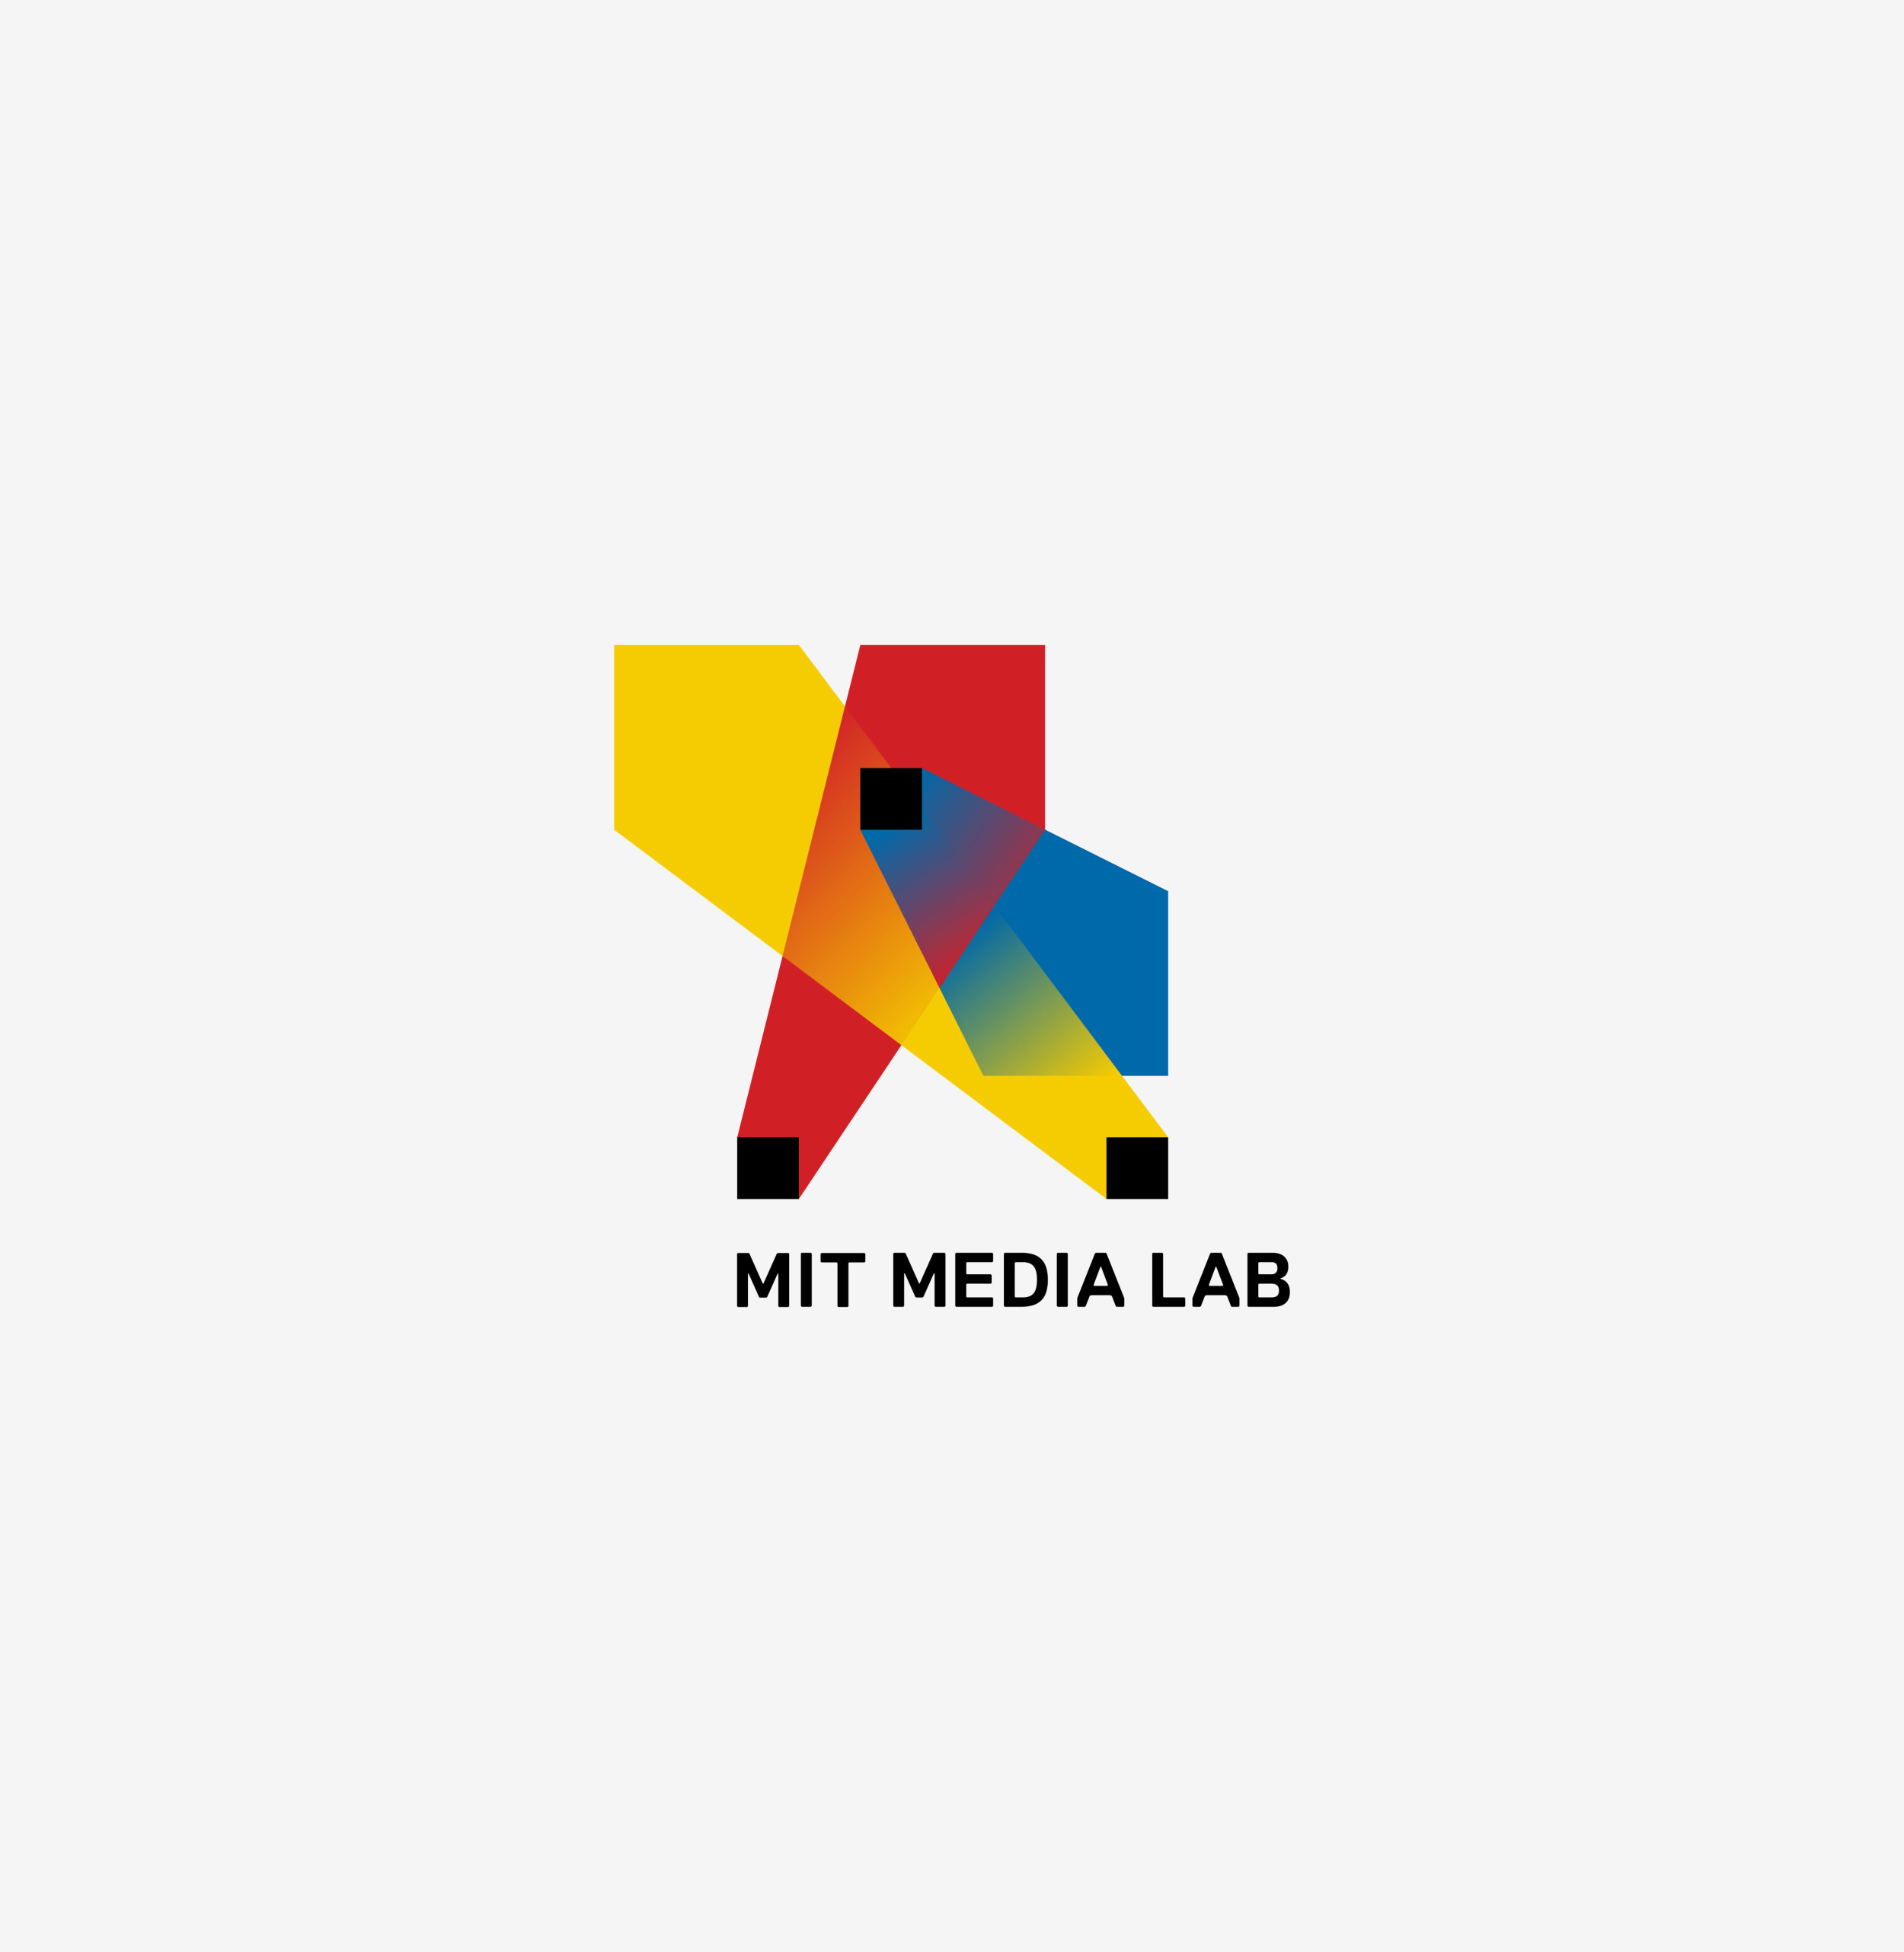 MIT Media Lab Identity